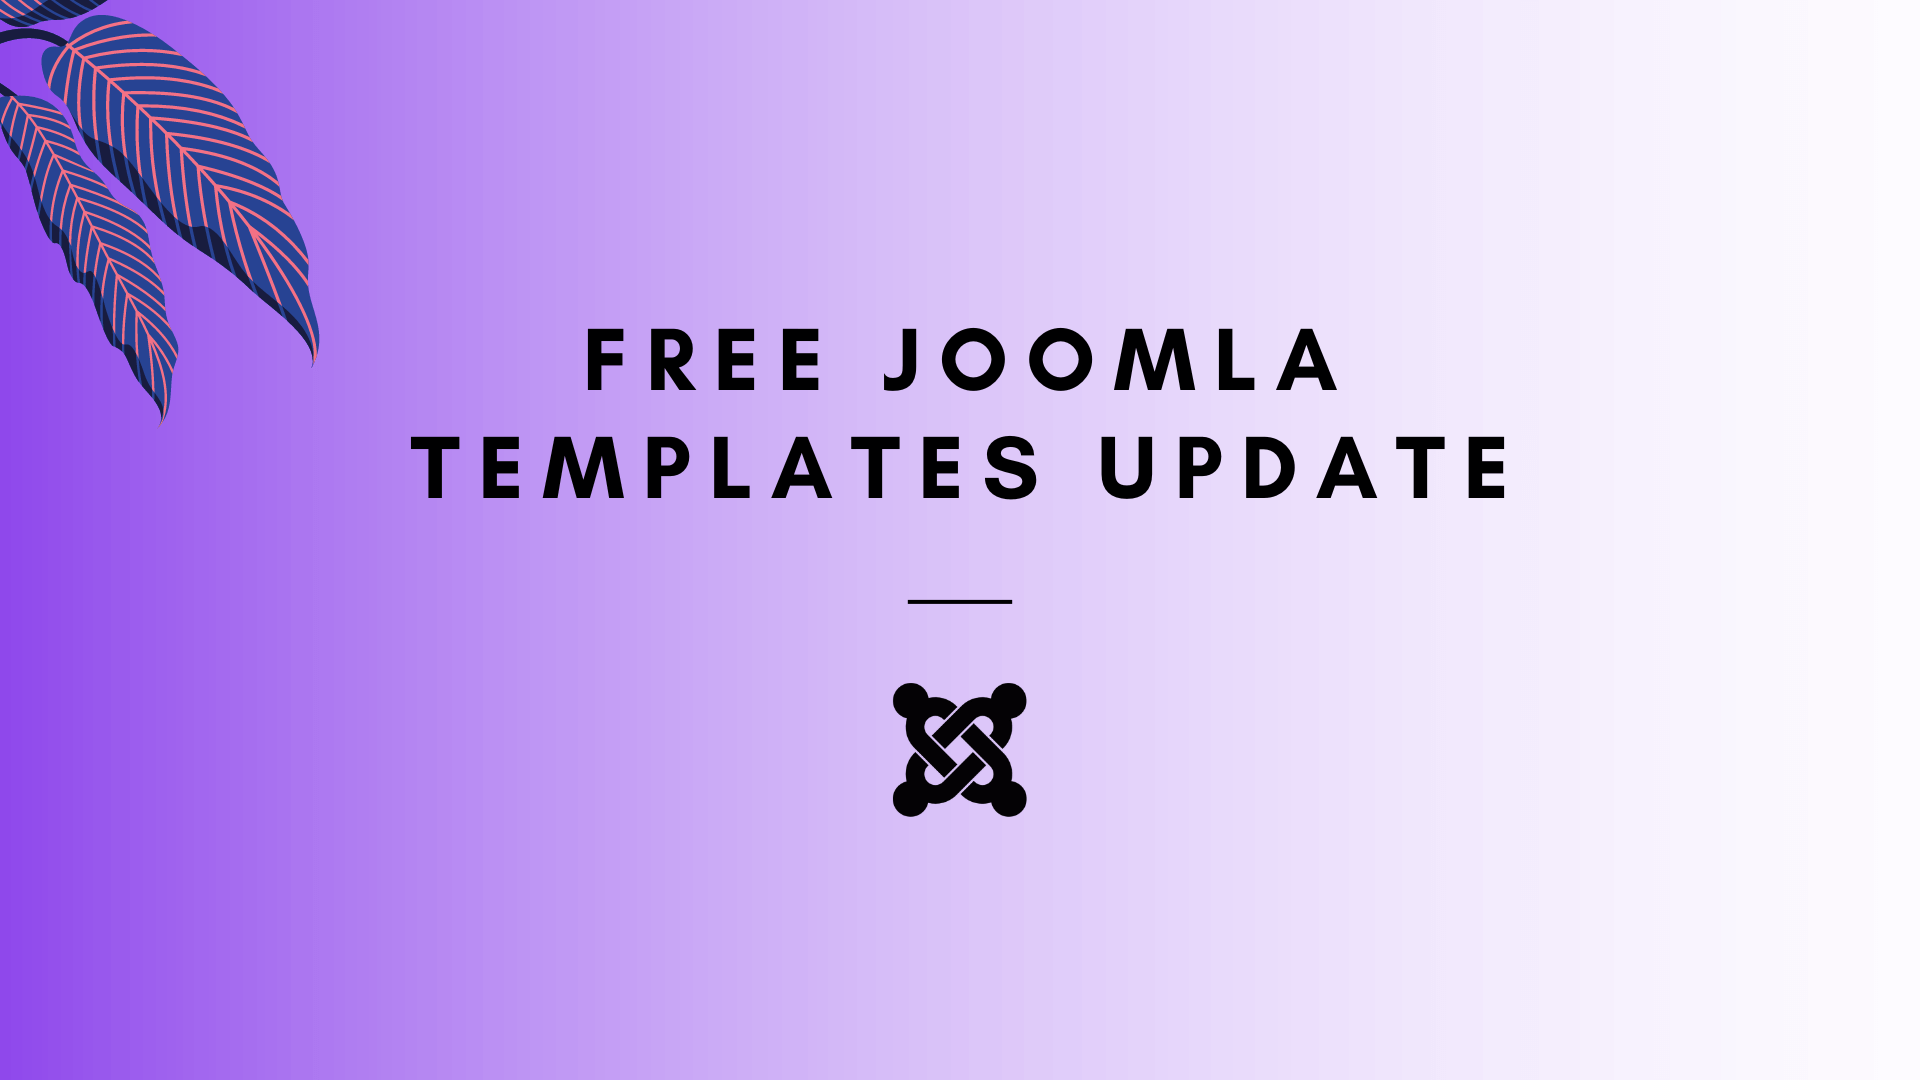 ordasoft Joomla News: Free Joomla Templates Update